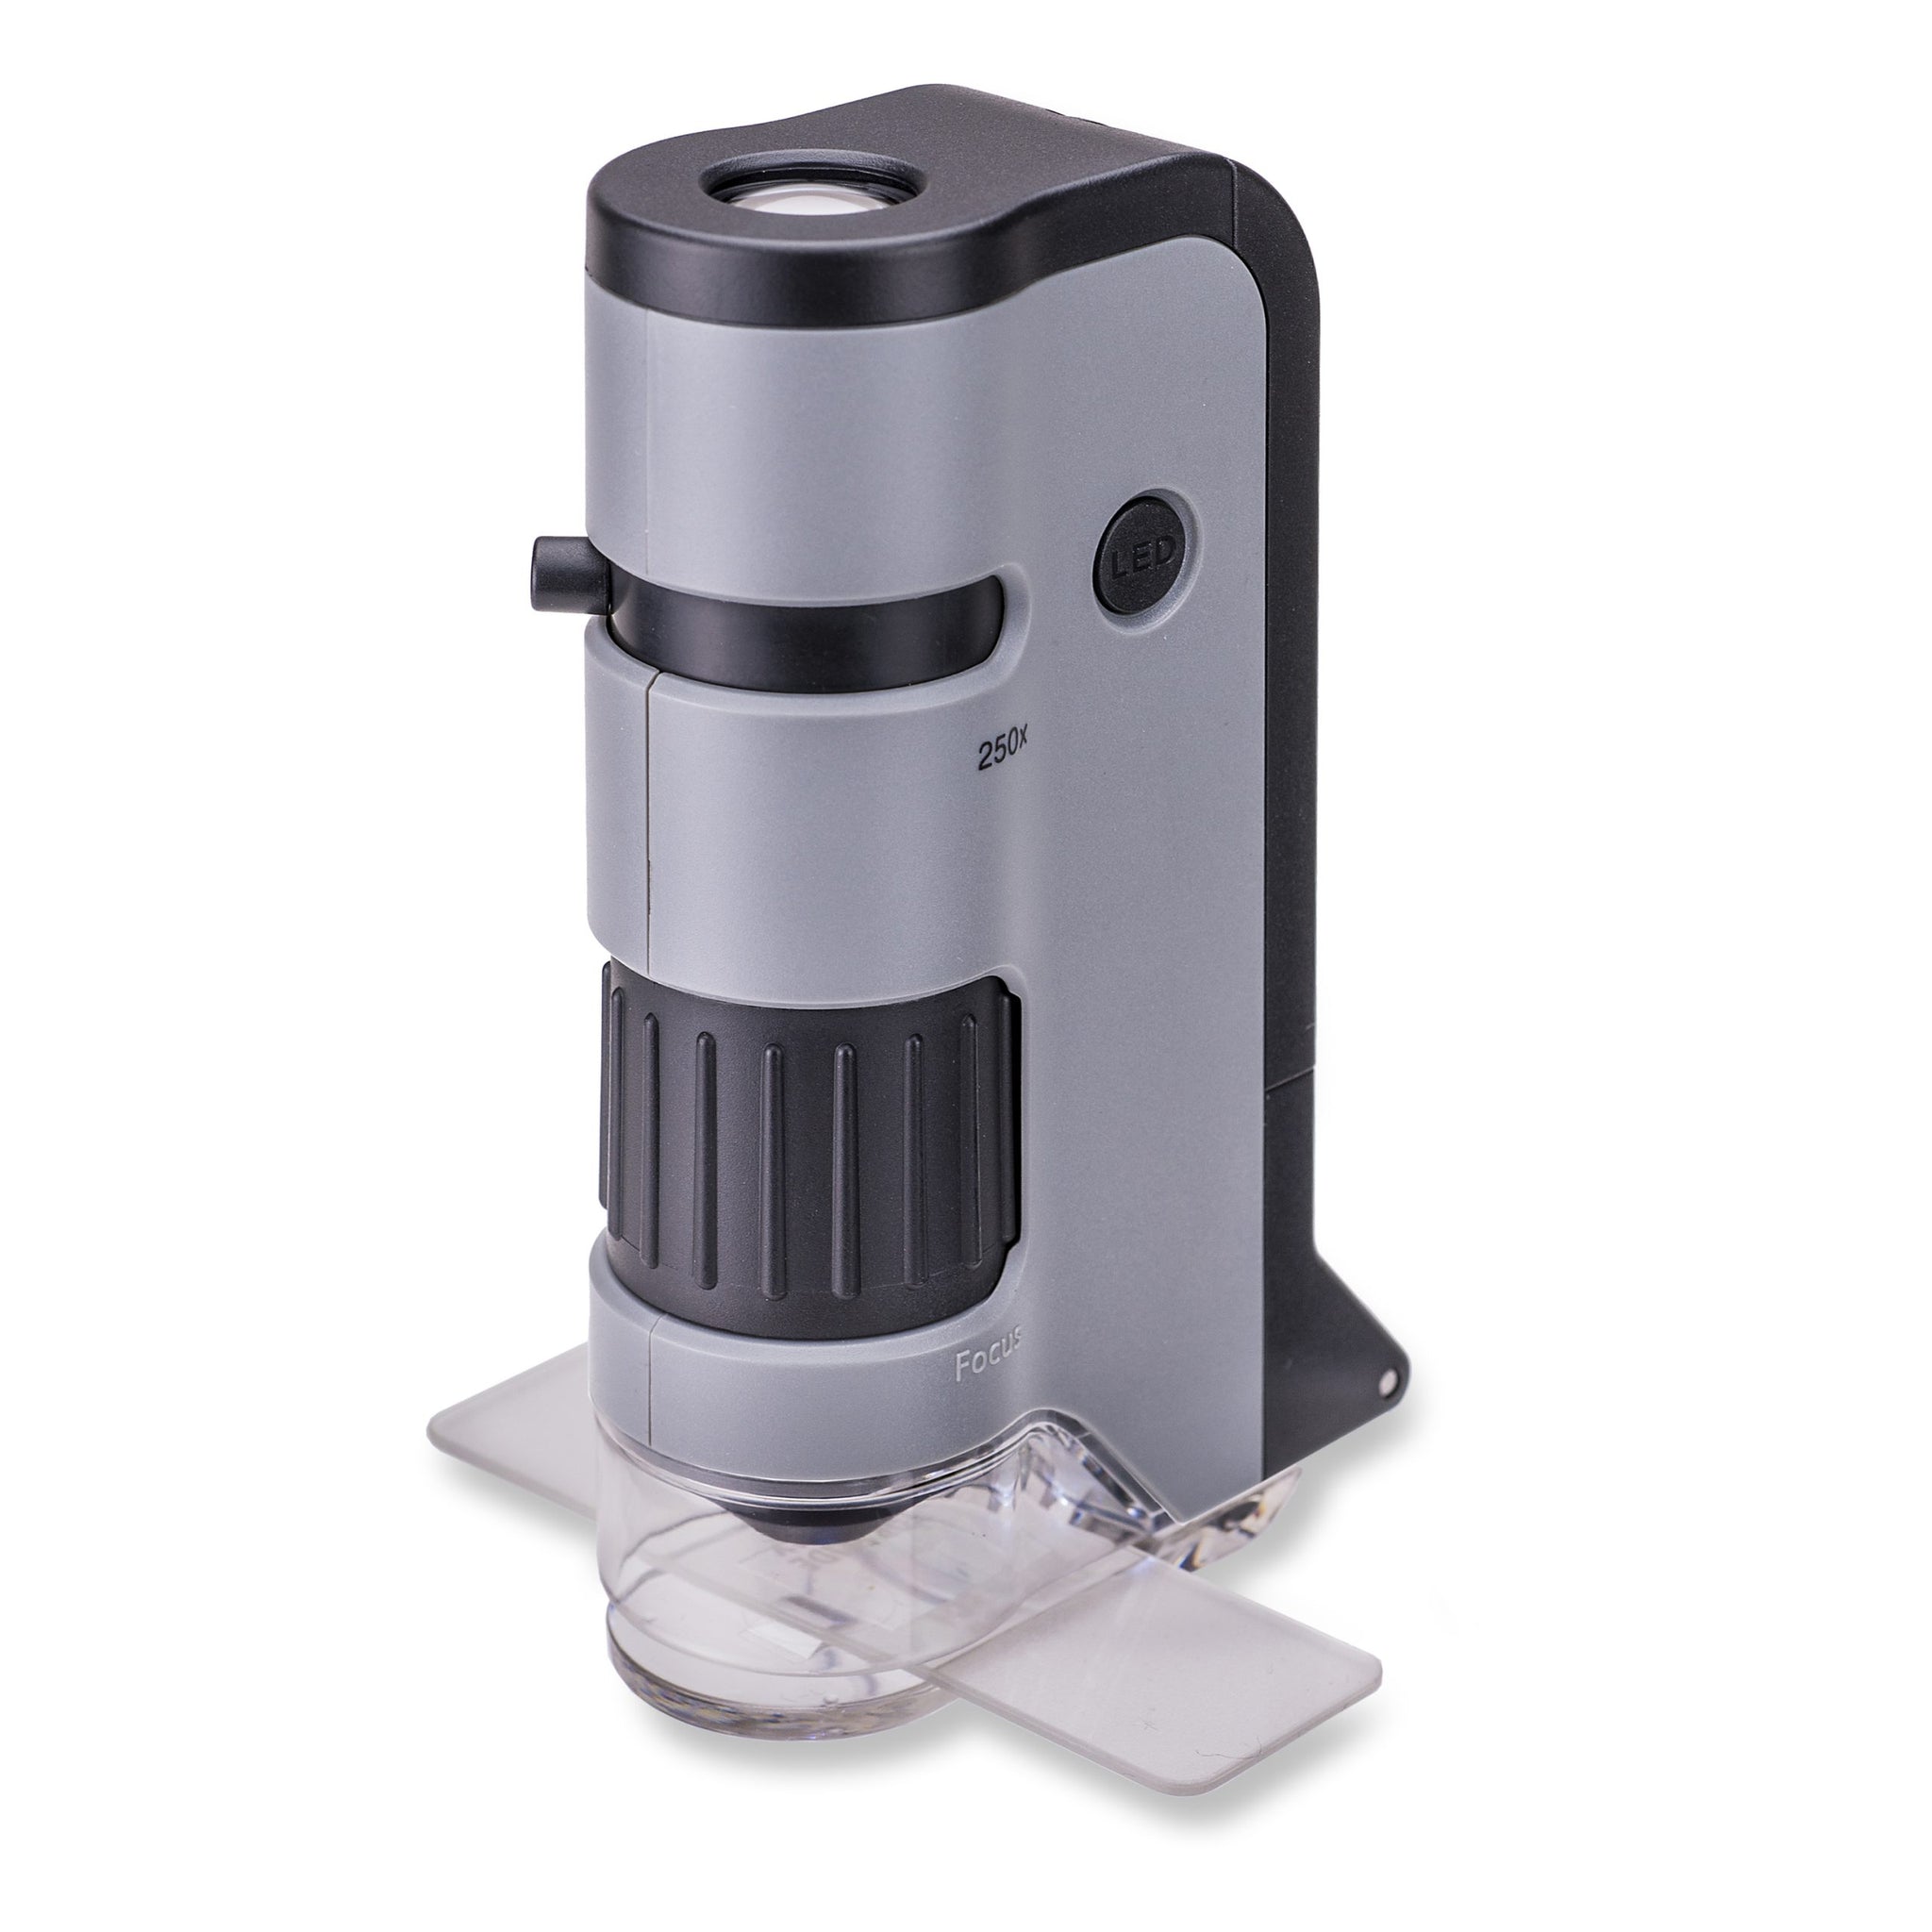 Handheld Microscope 100X Mini Pocket Portable Microscope LED